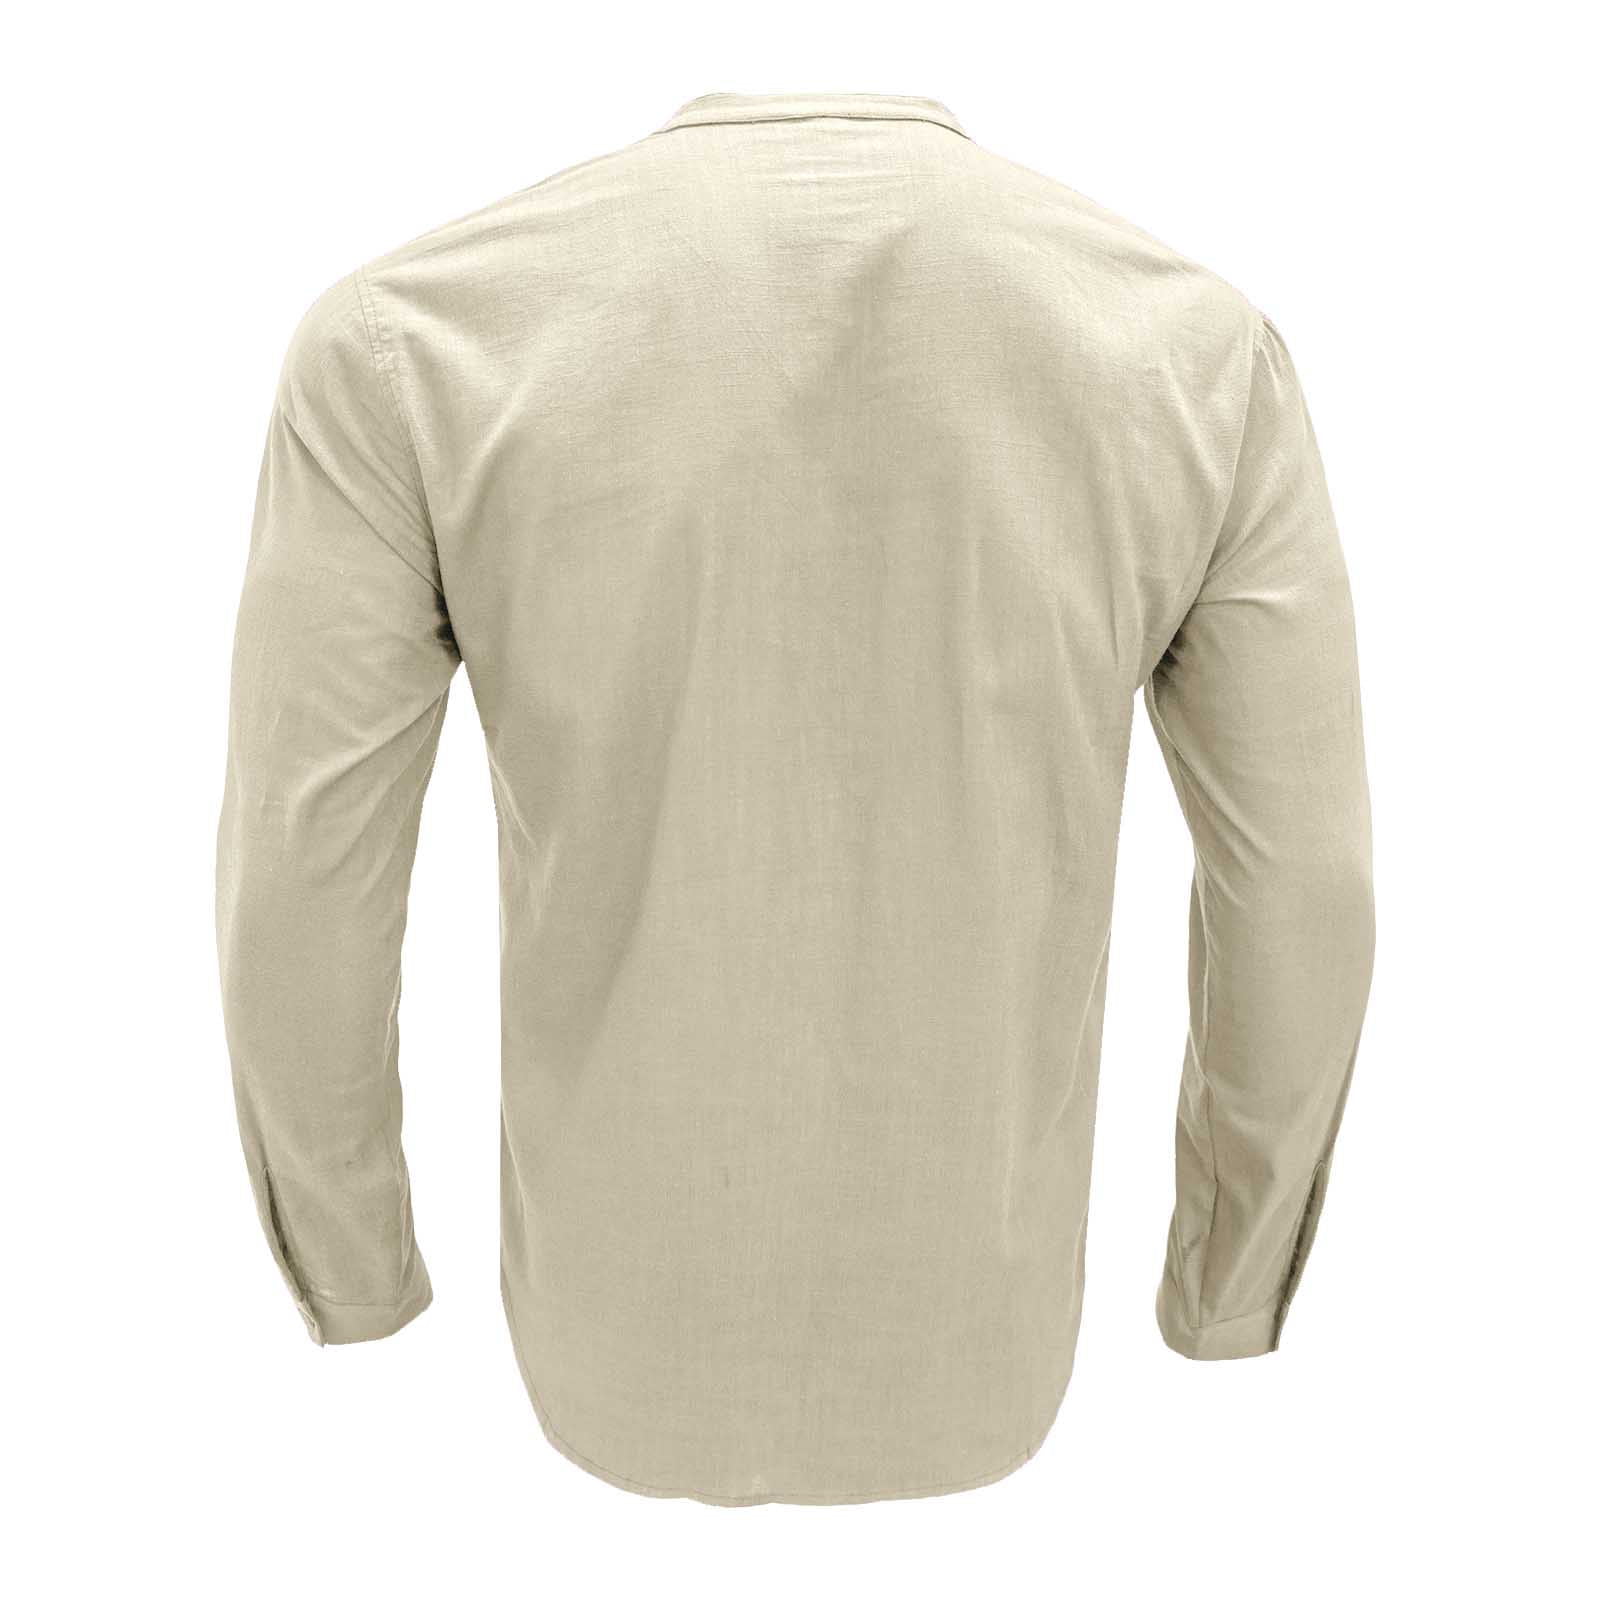  Mens Hoodies Pullover Men's Cotton Linen Button Down Dress  Shirt Long Sleeve Casual Beach Tops Long Sleeve Western Shirts 9iu Khaki :  Sports & Outdoors